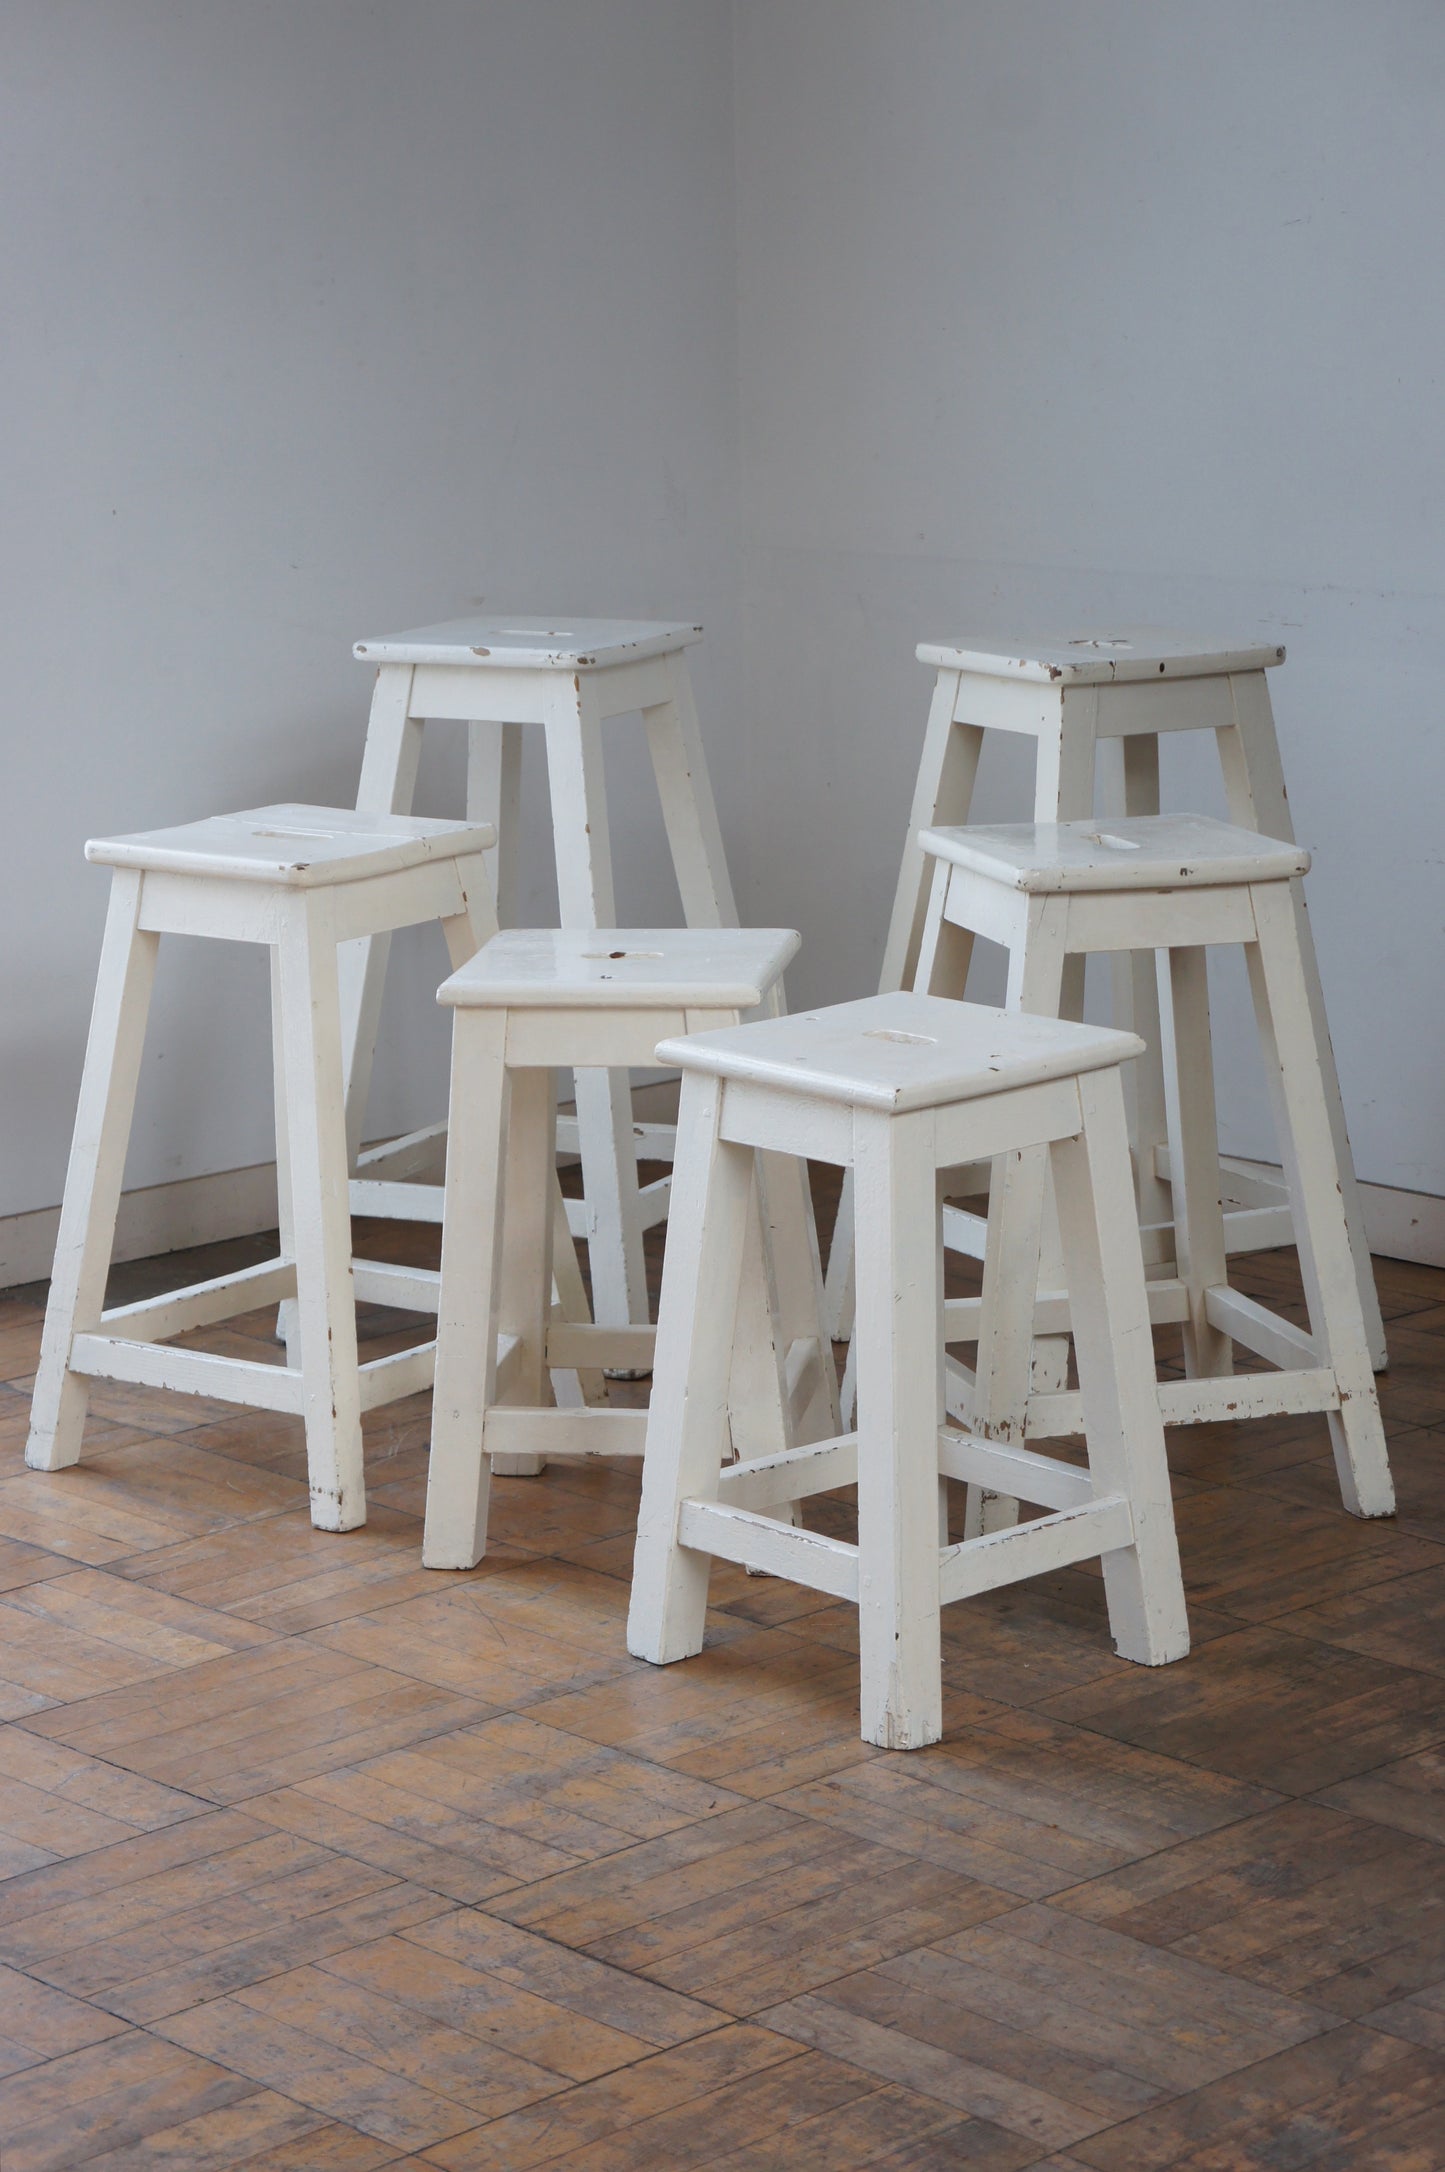 GOMENOL Wood stool 78